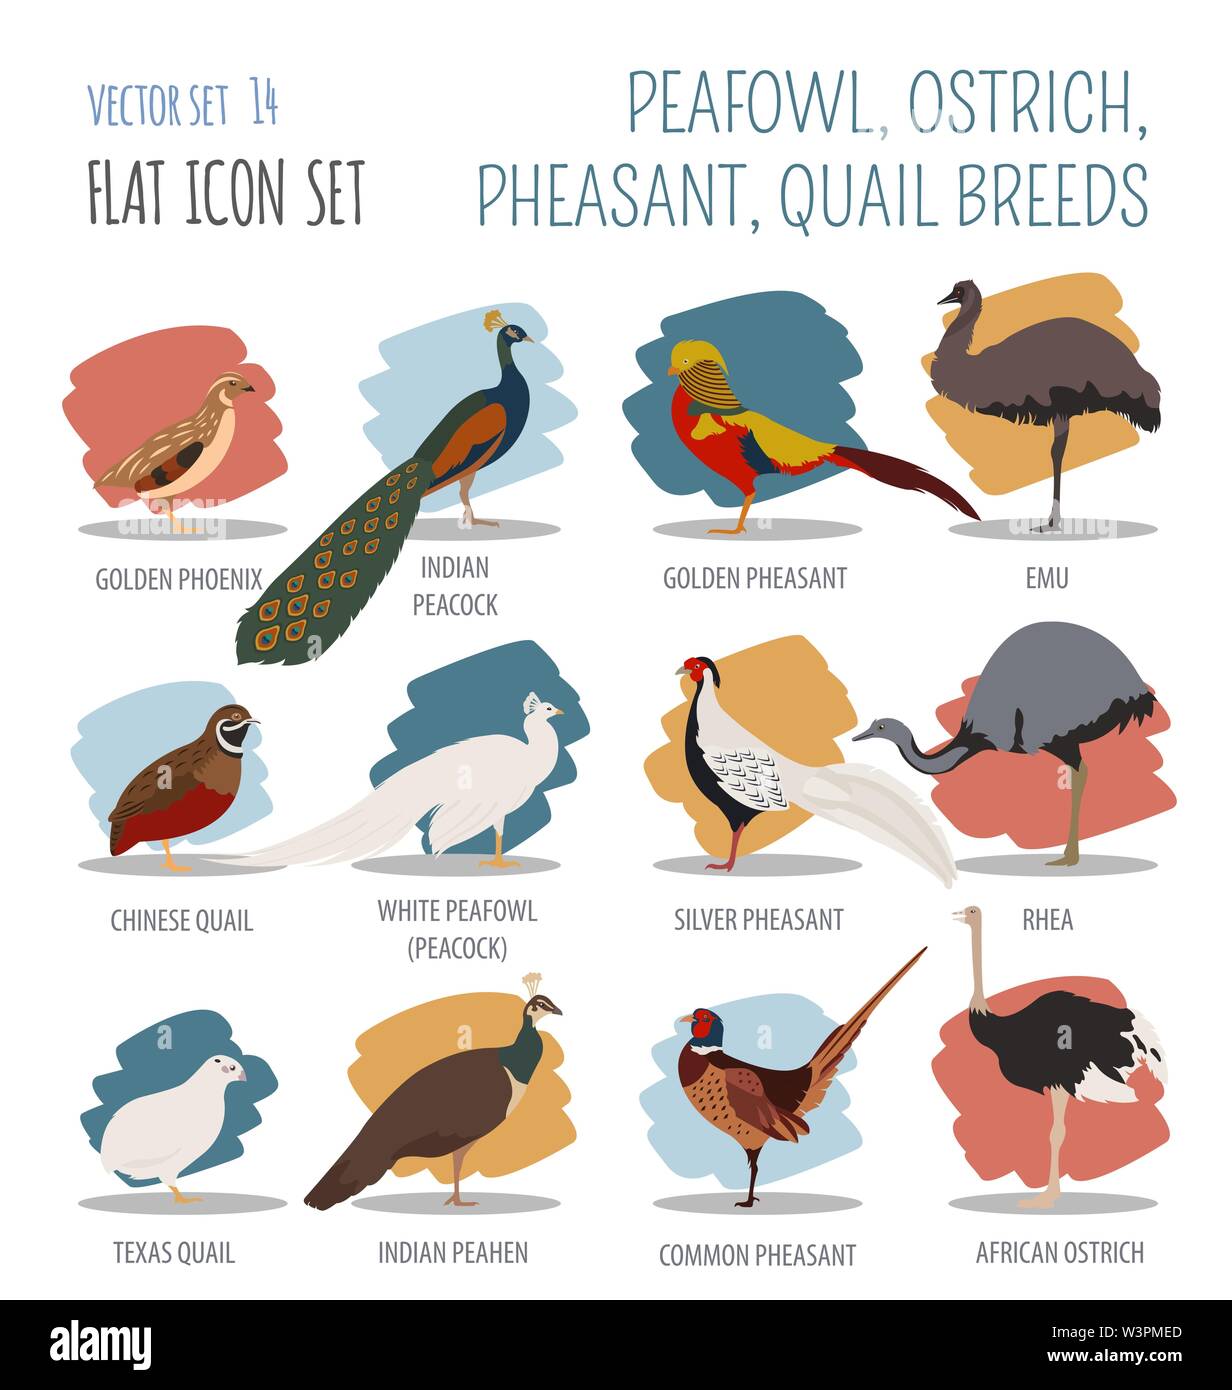 Poultry farming. Peafowl, ostrich, pheasant, quail breeds icon set. Flat design. Vector illustration Stock Vector